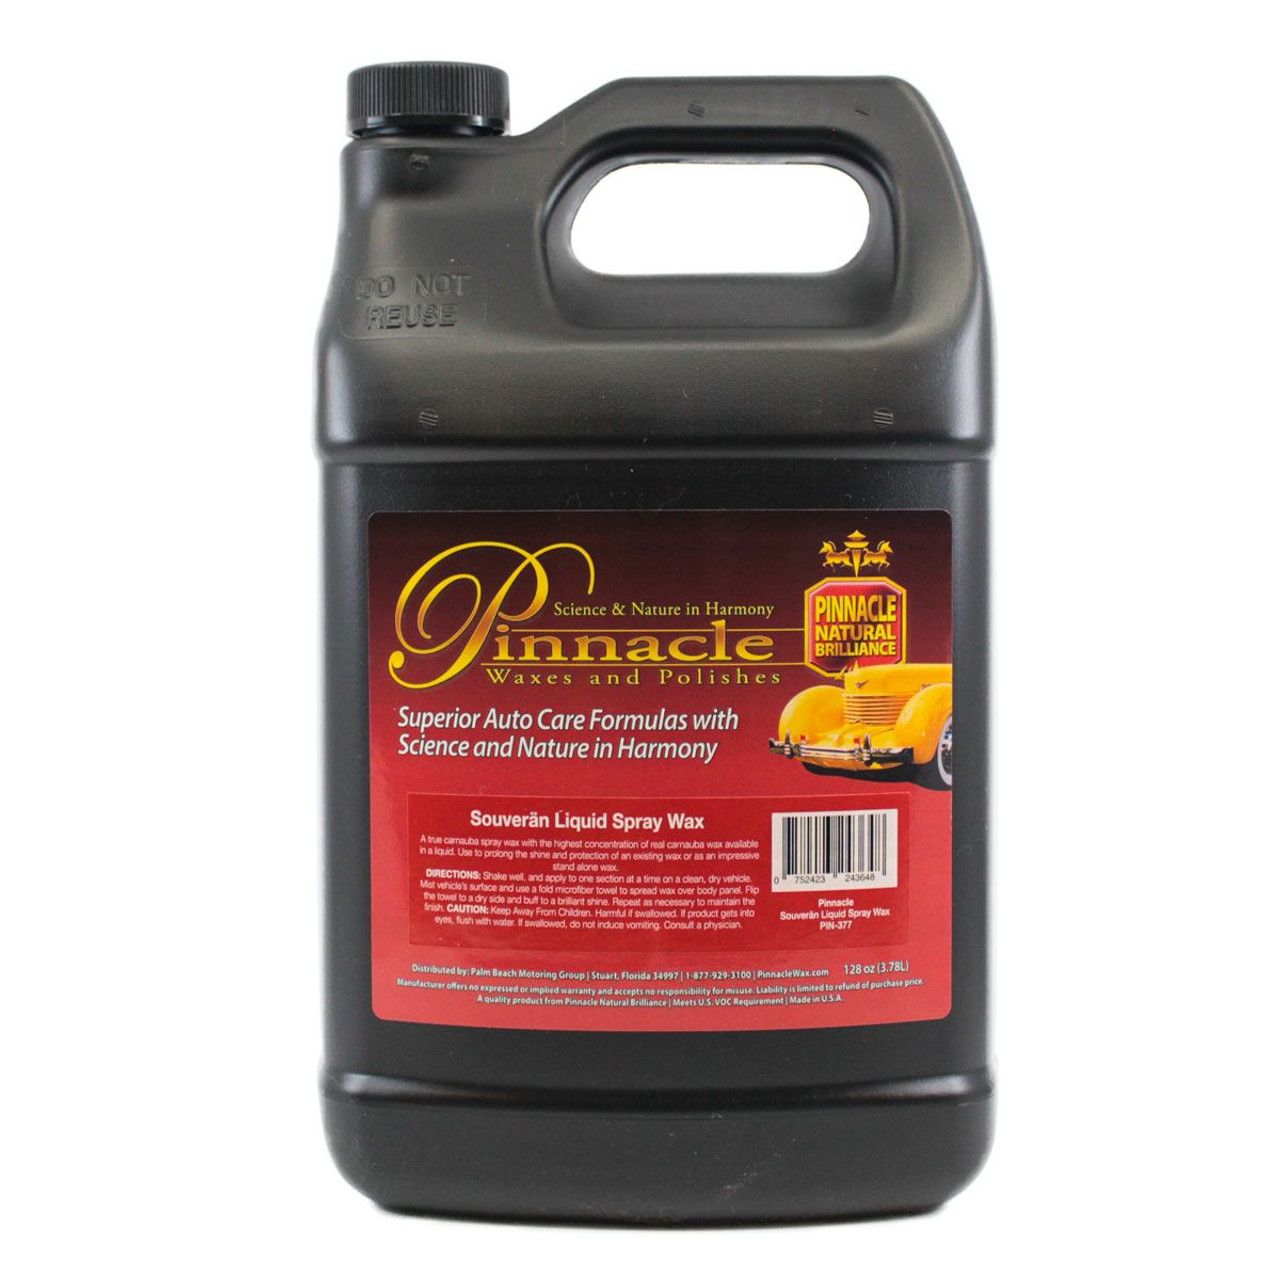 Pinnacle Souveran Liquid Spray Wax shines and protects all types